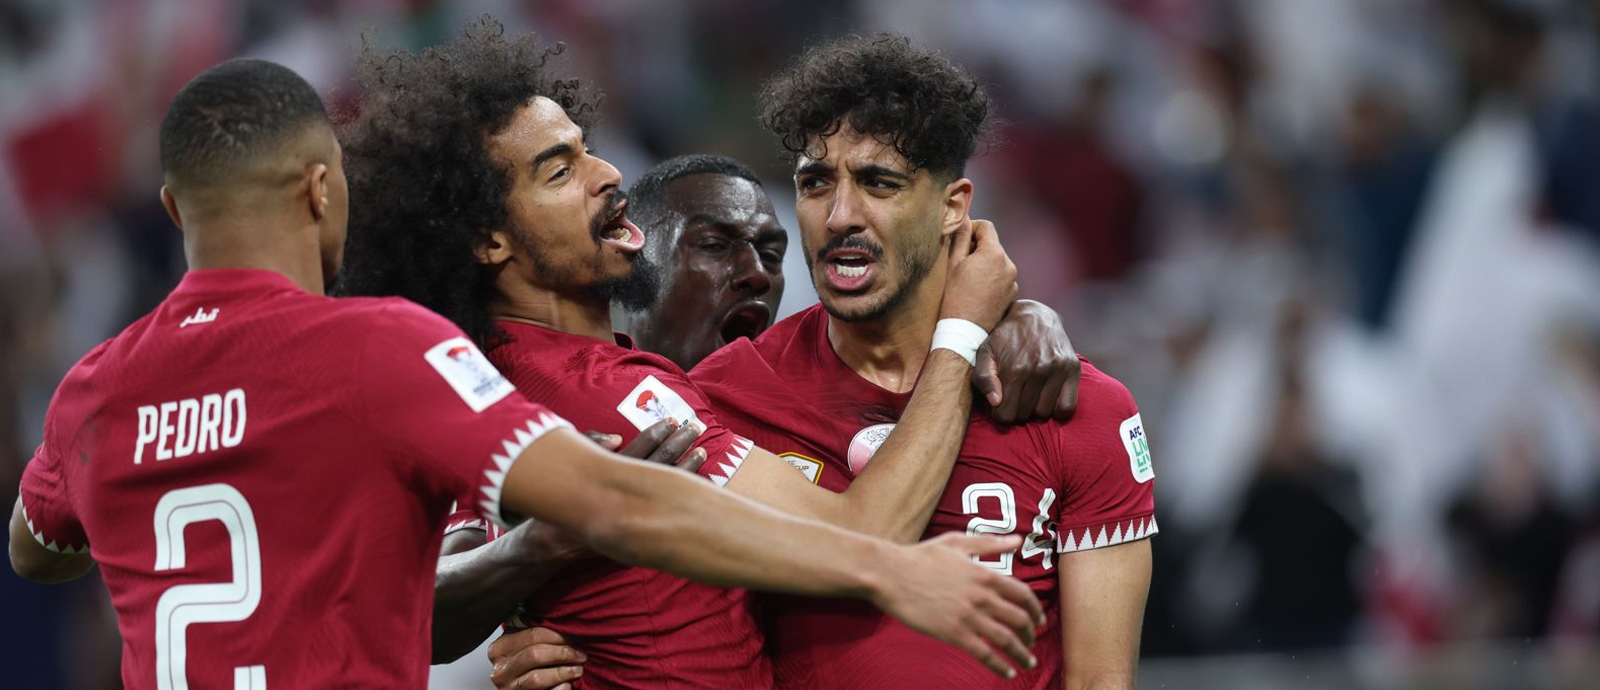 The Qatari team 